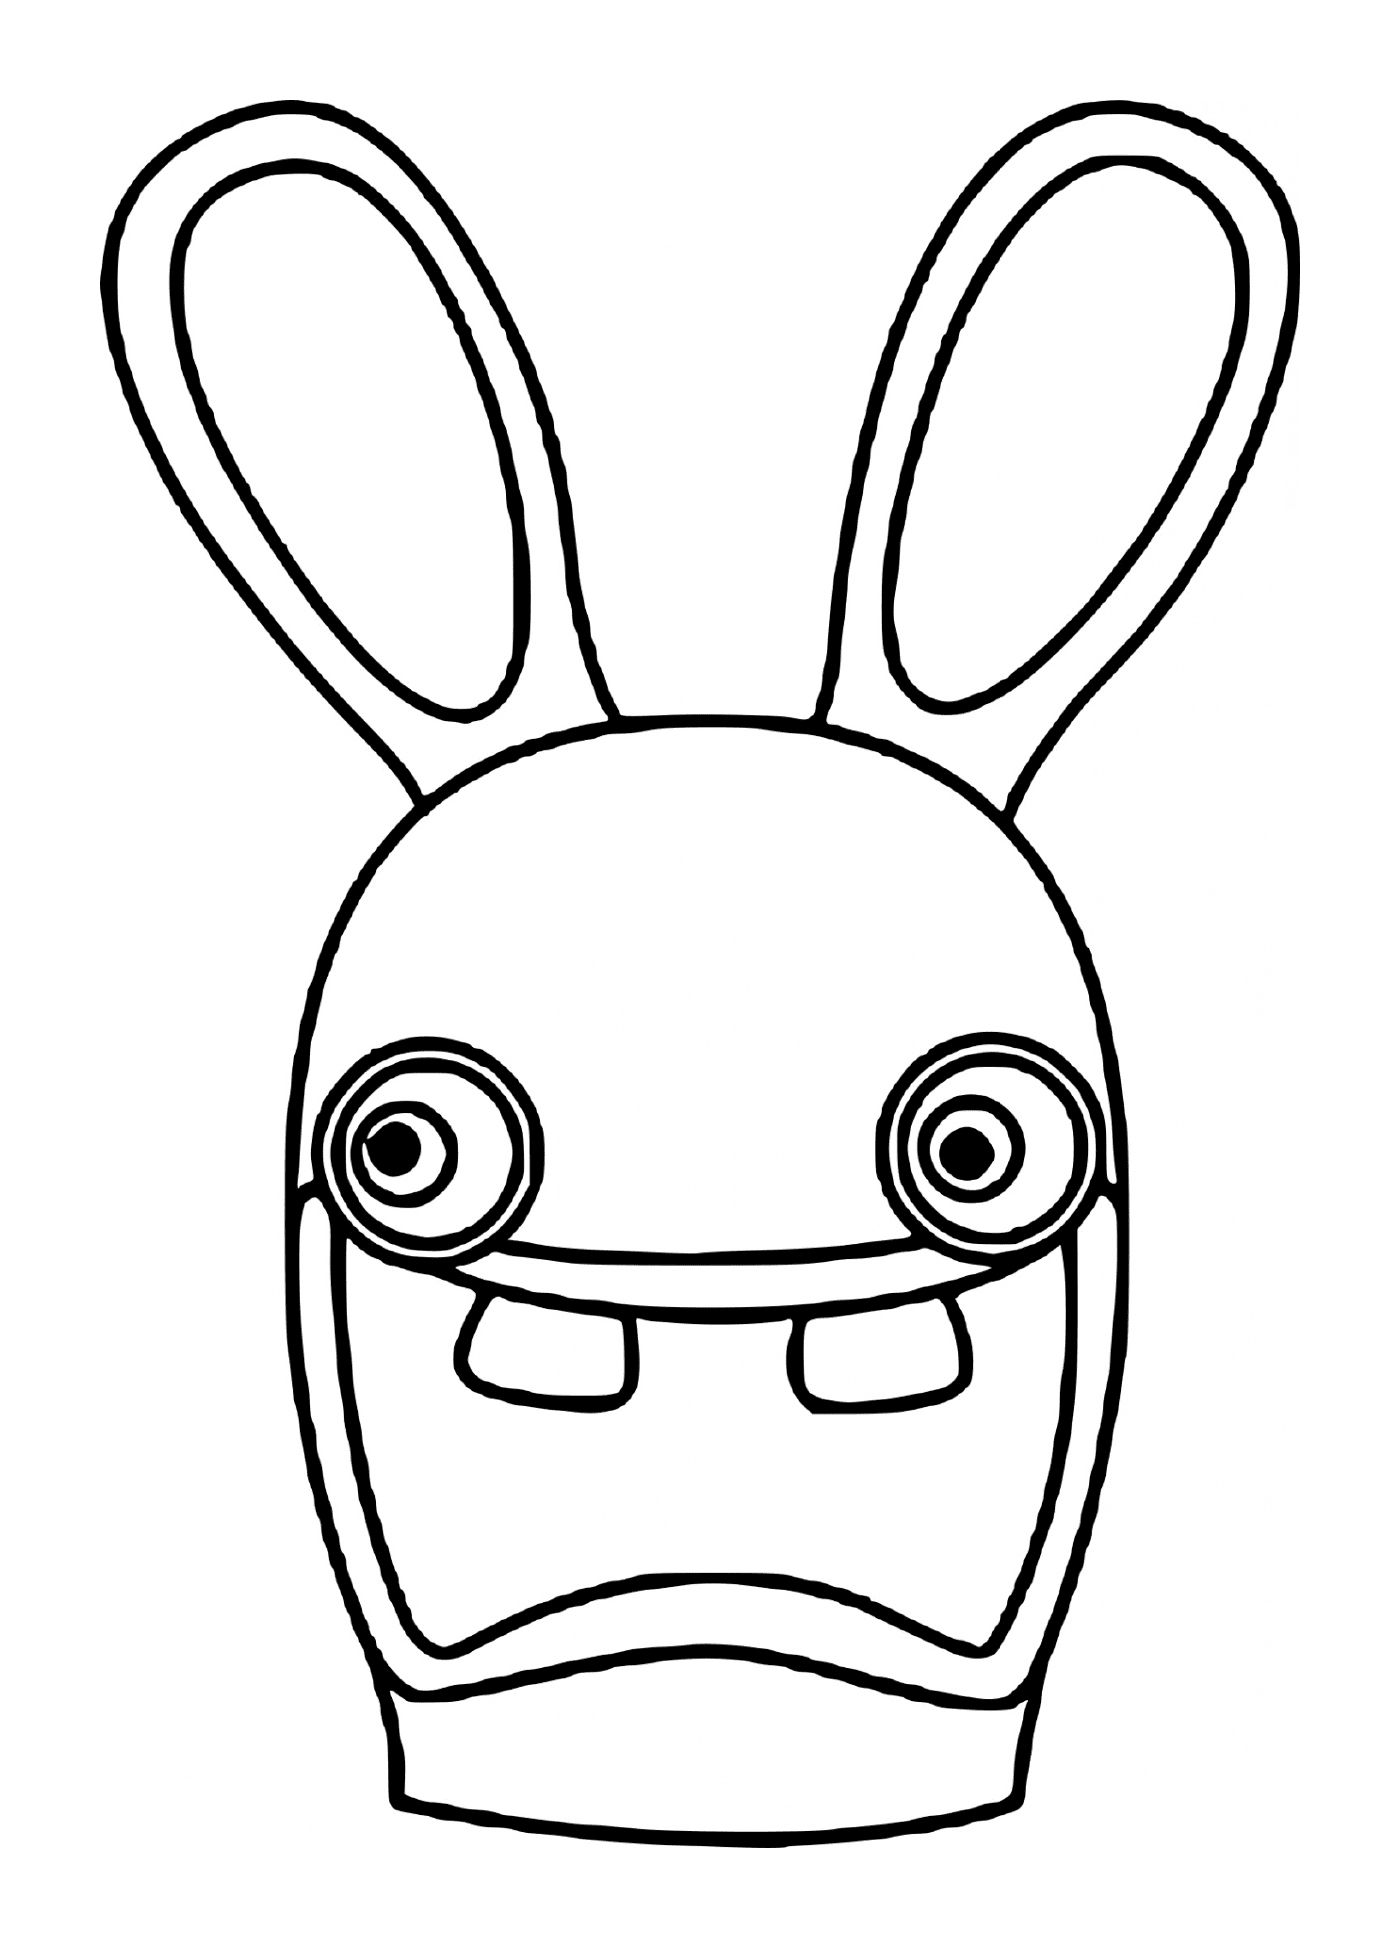  Rabbit's head, moron 